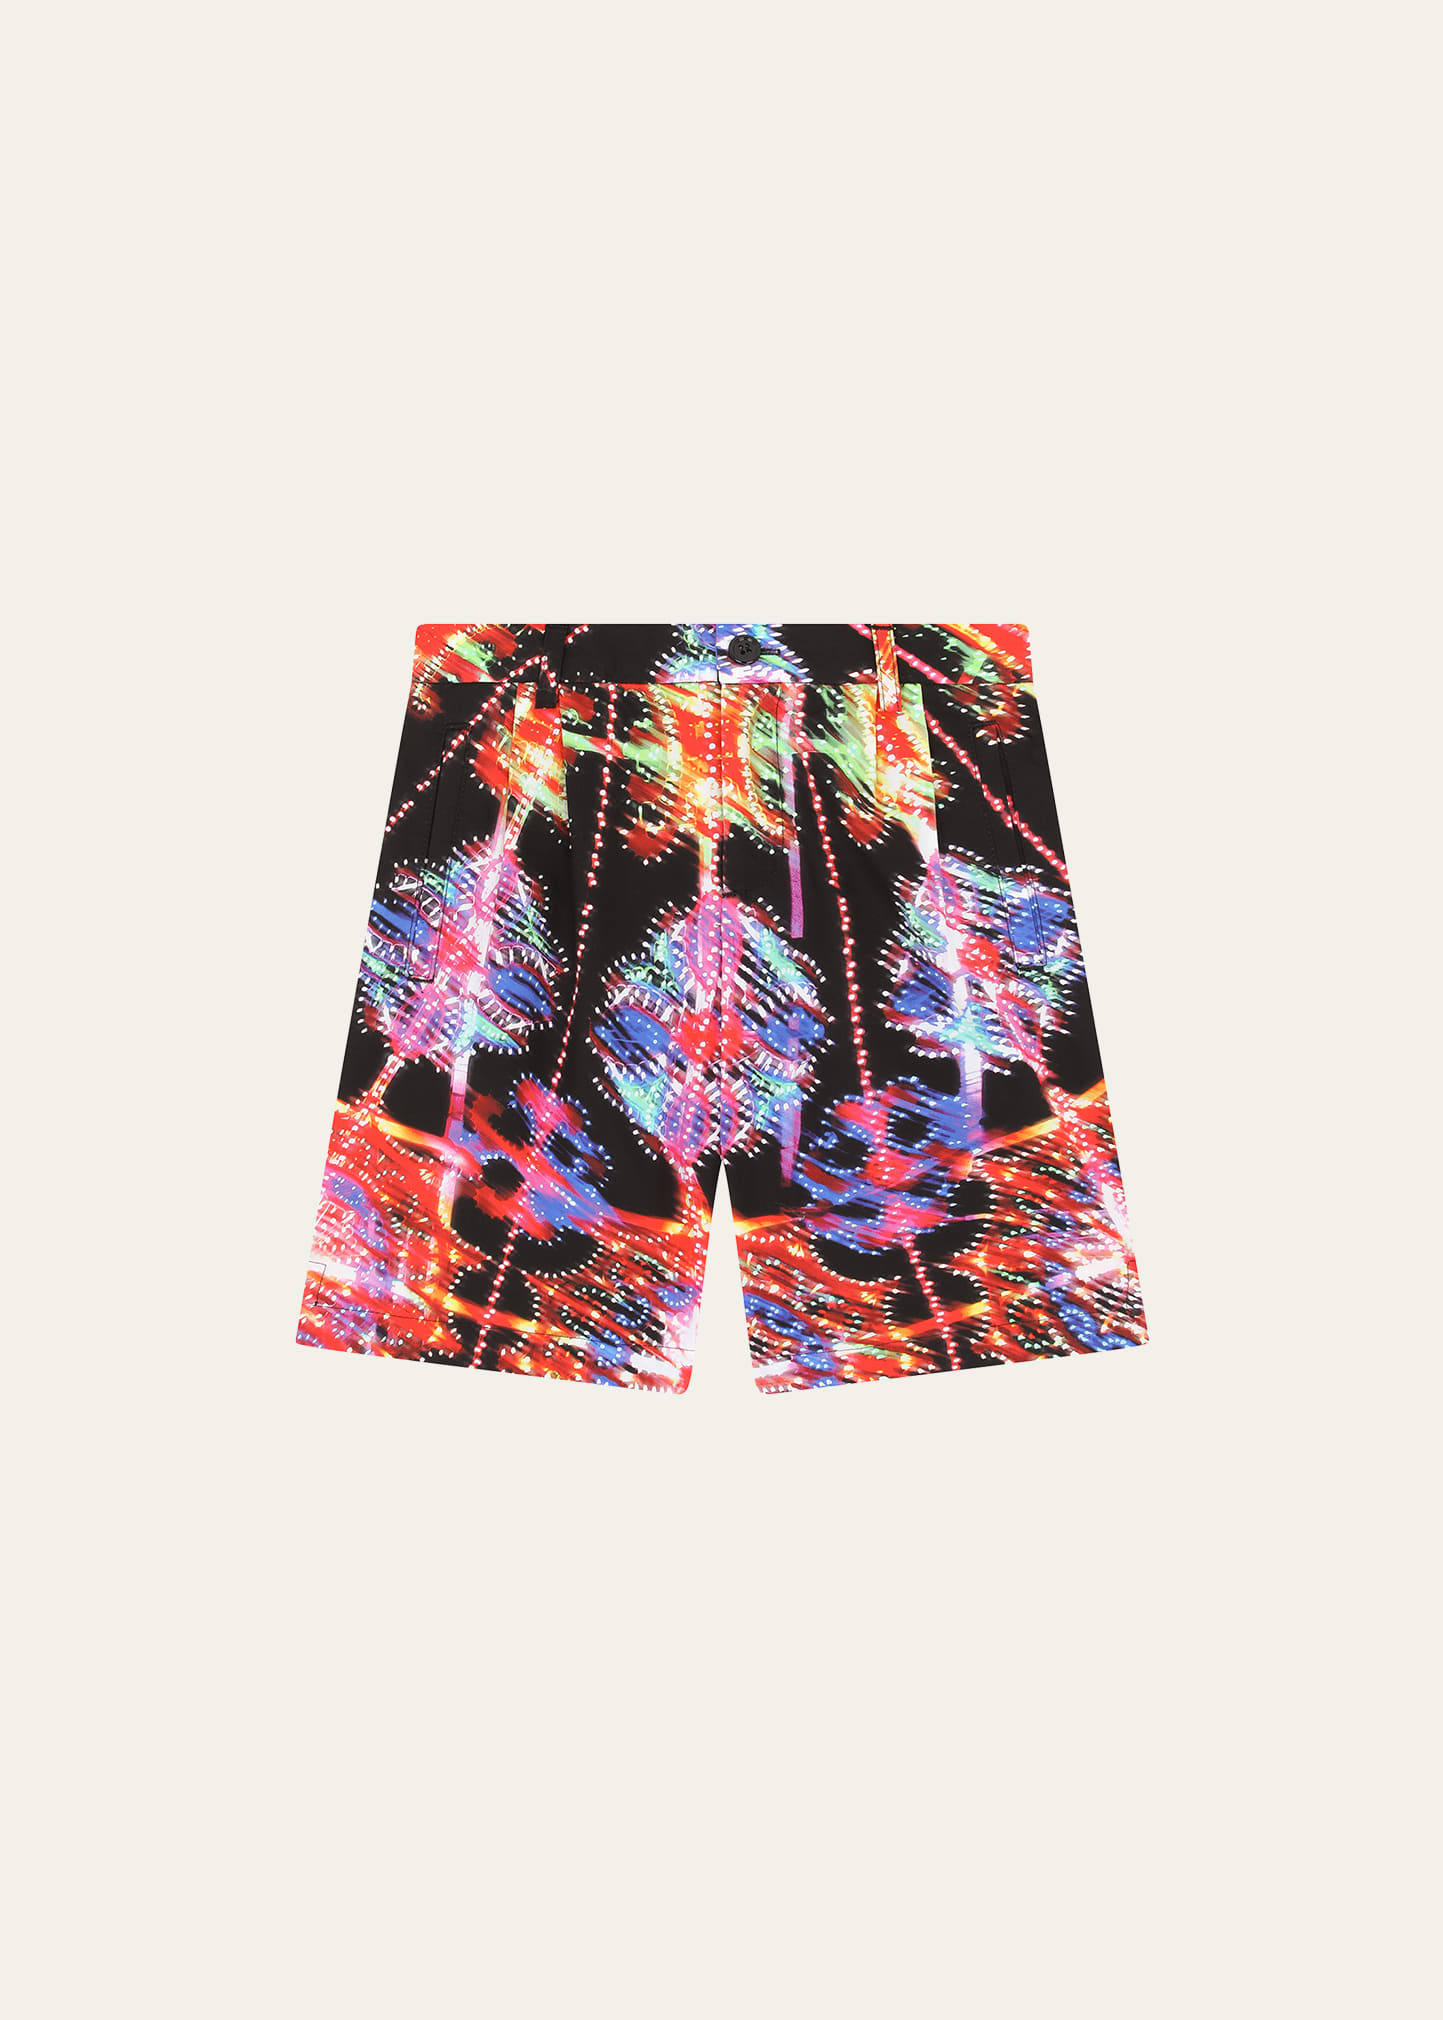 Dolce&Gabbana Kid's Luminary-Print Nylon Shorts, Size 8-12